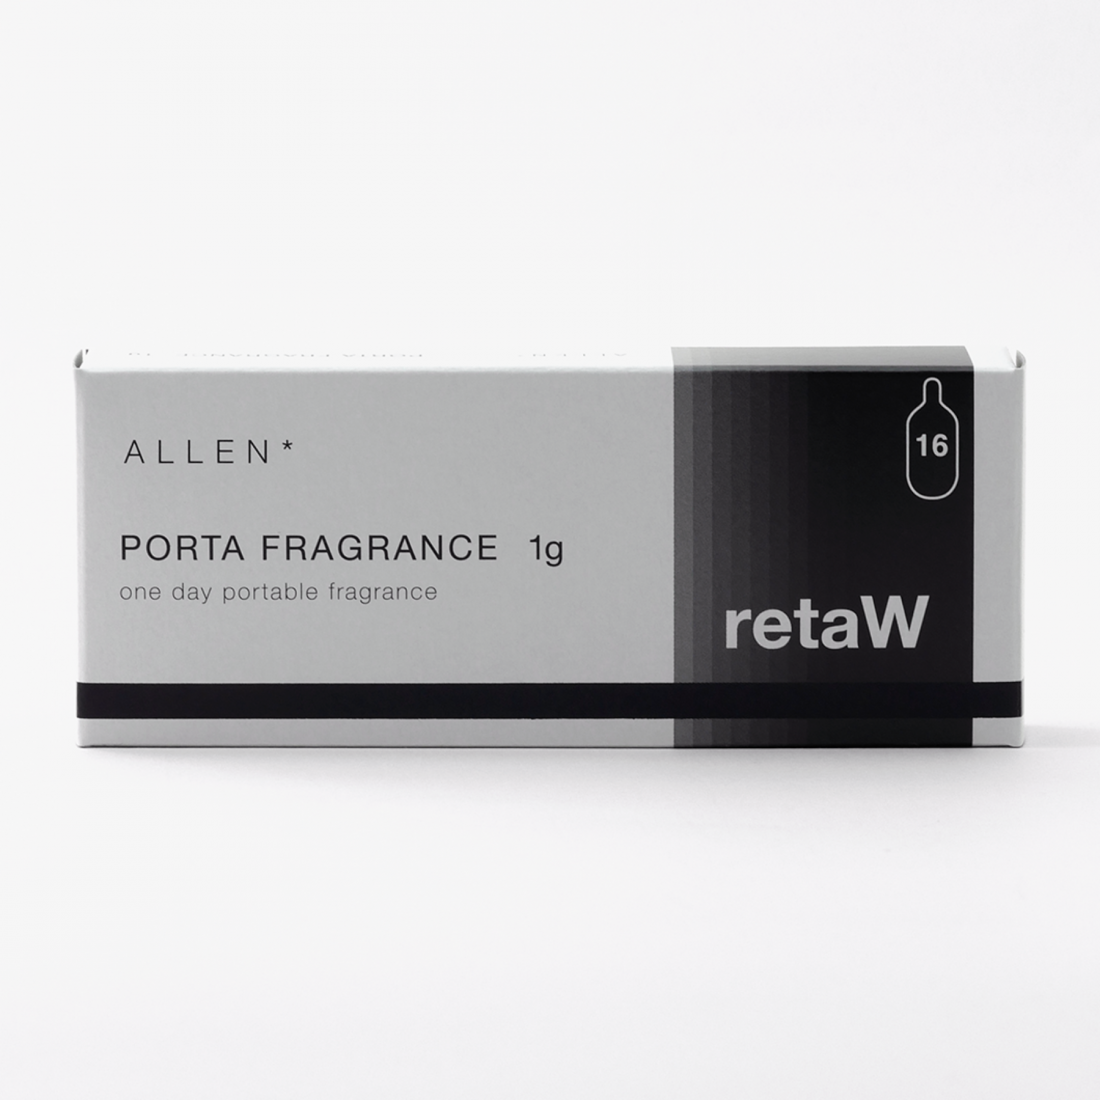 retaW / PORTA FRAGRANCE ALLEN*